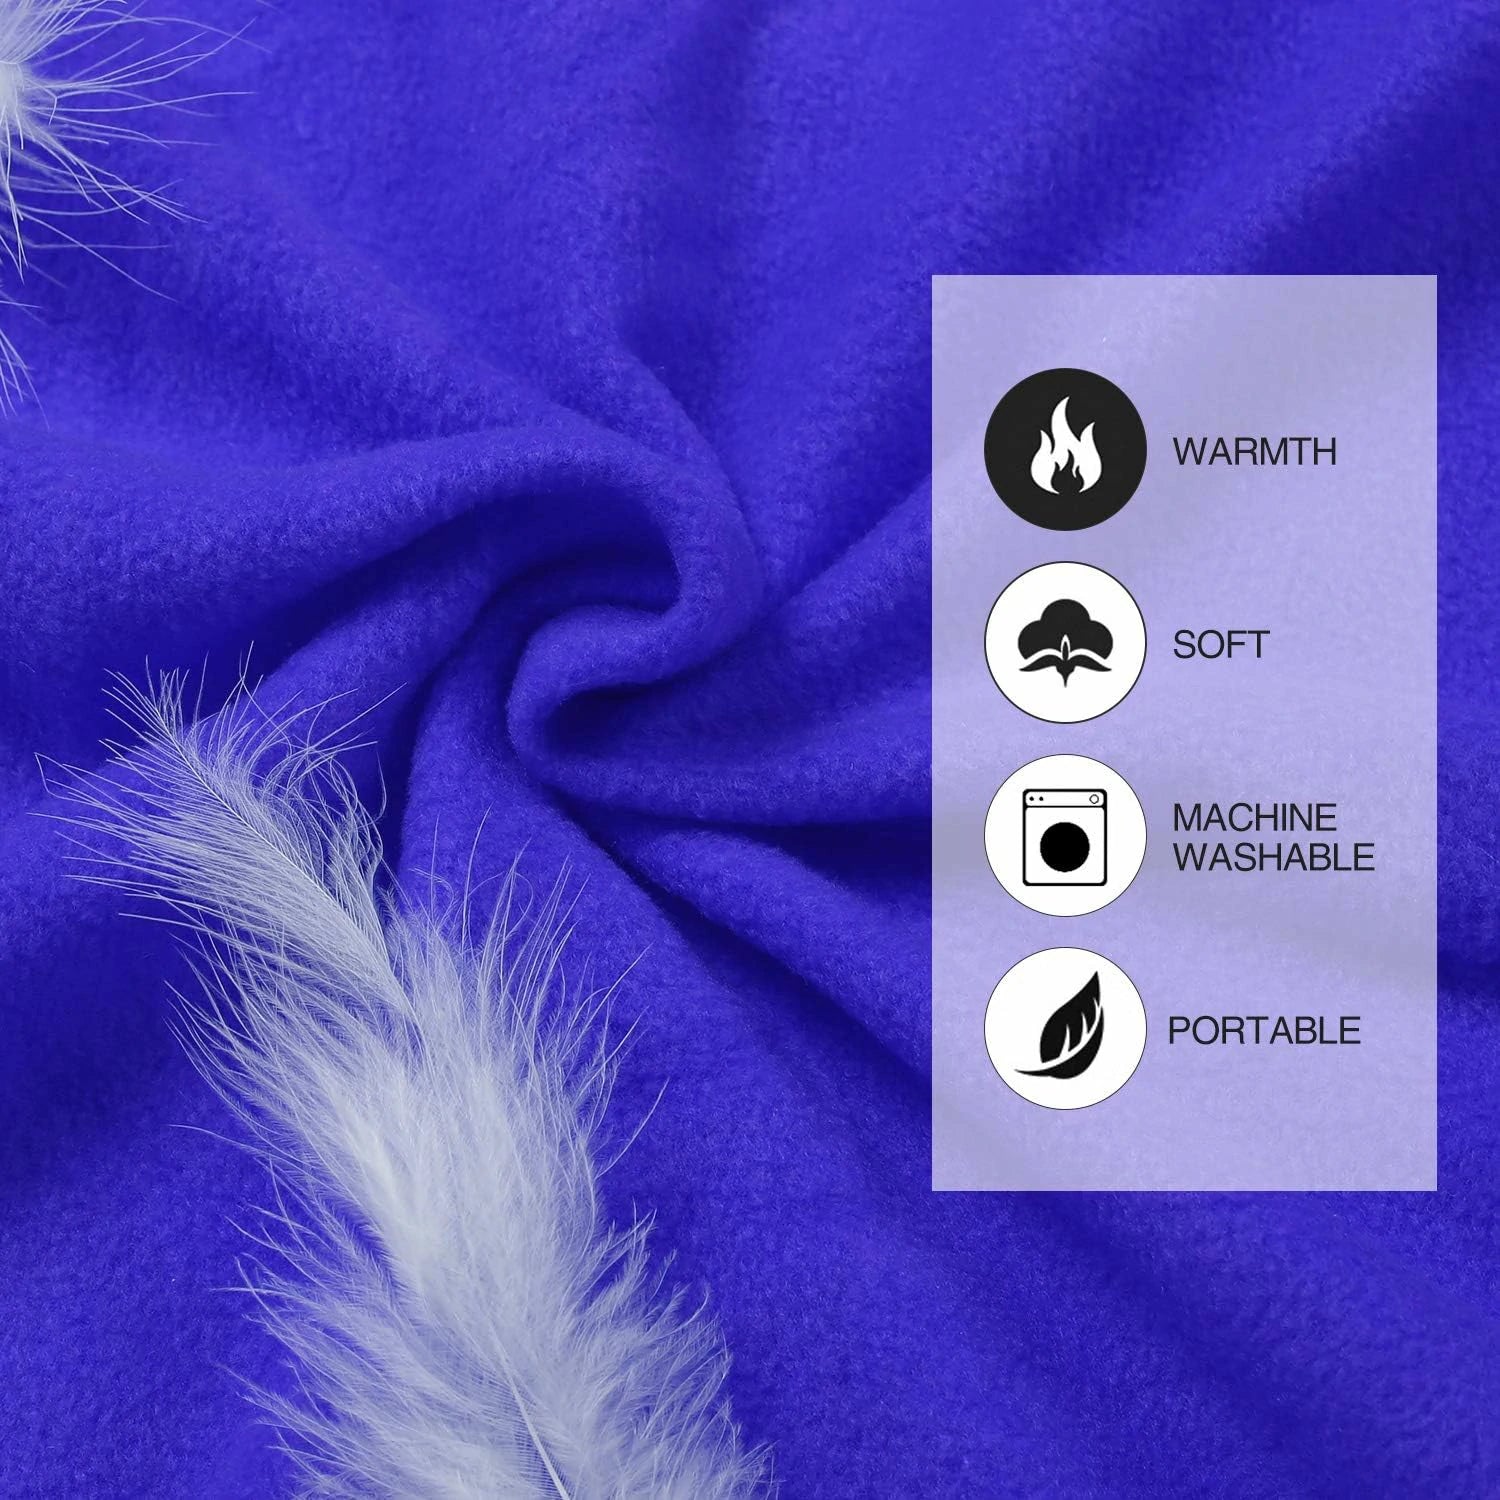 REDCAMP Fleece Sleeping Bag Liner for Adult Warm or Cold Weather